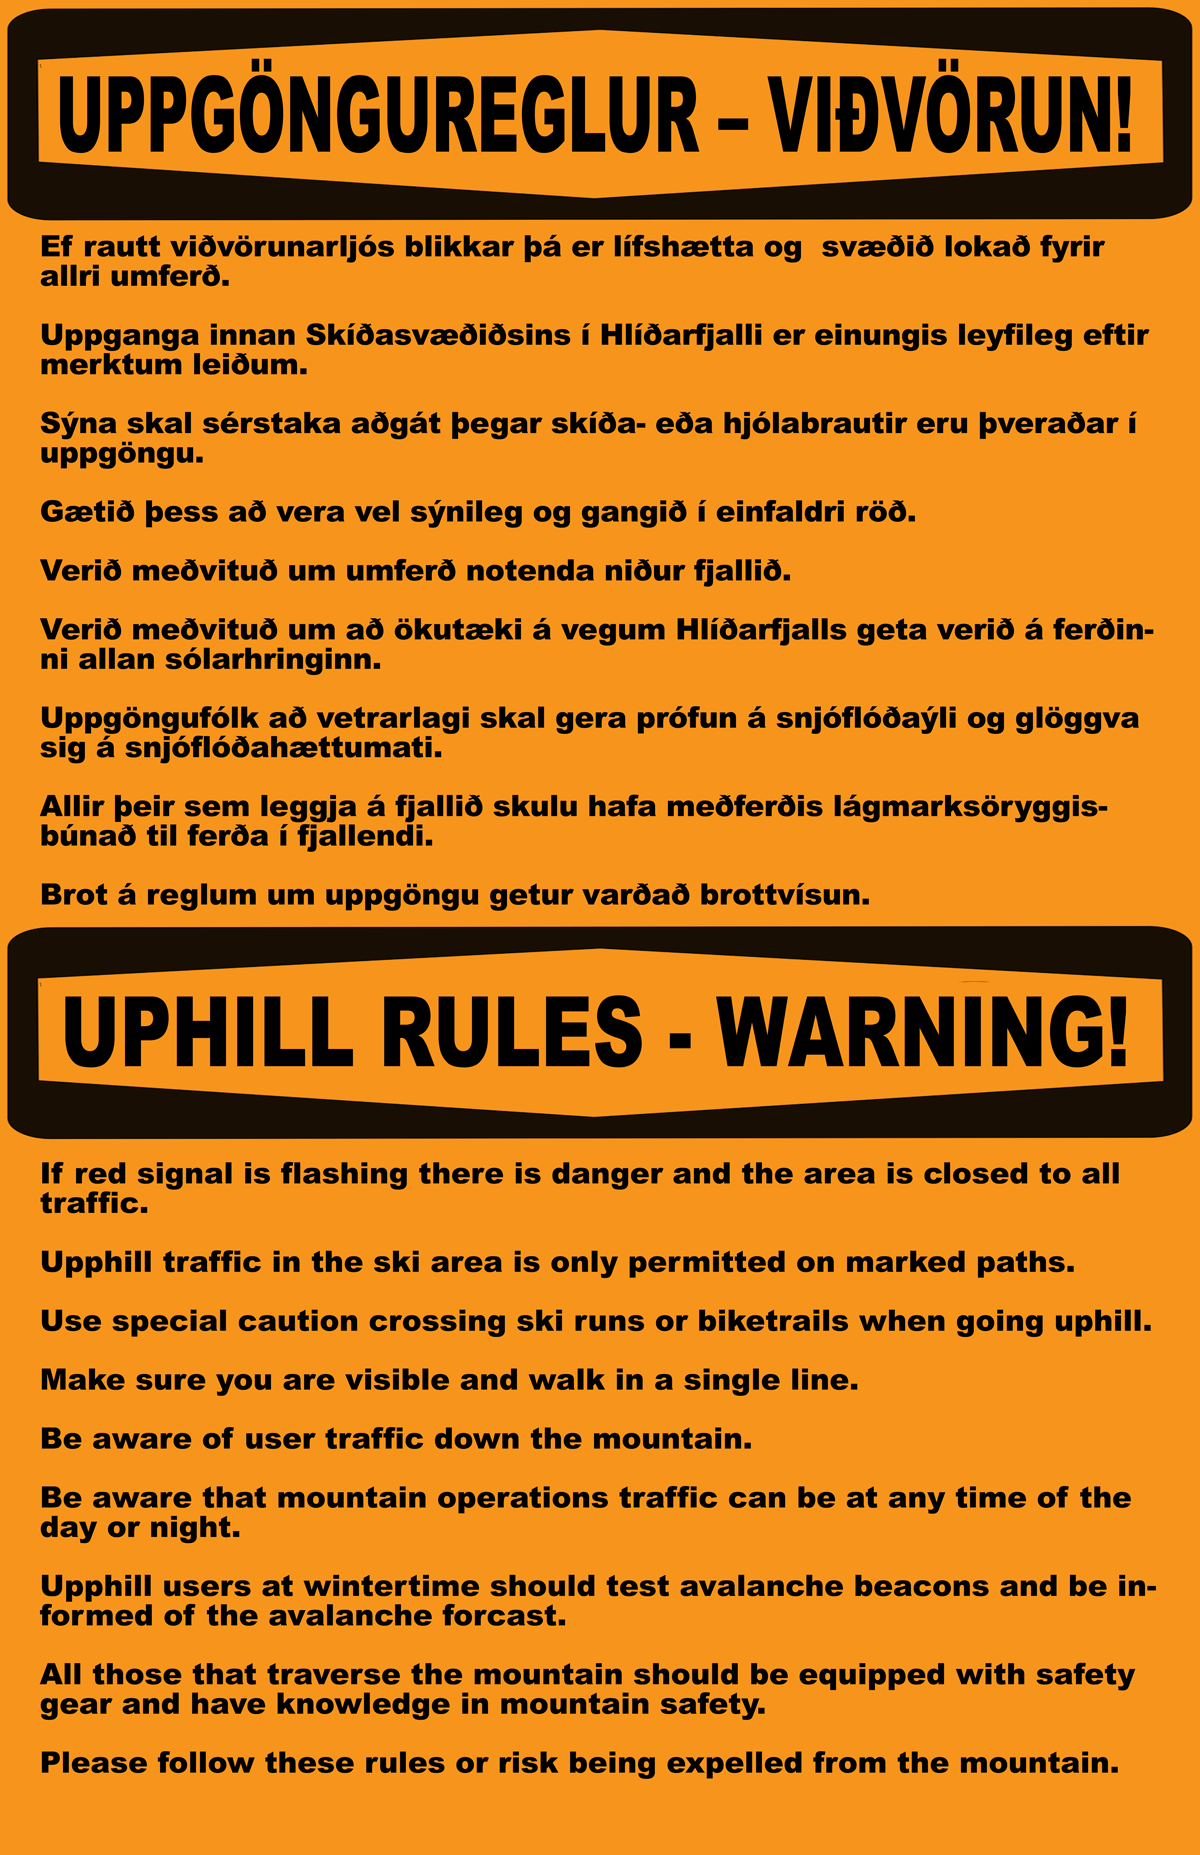 Upphil rules